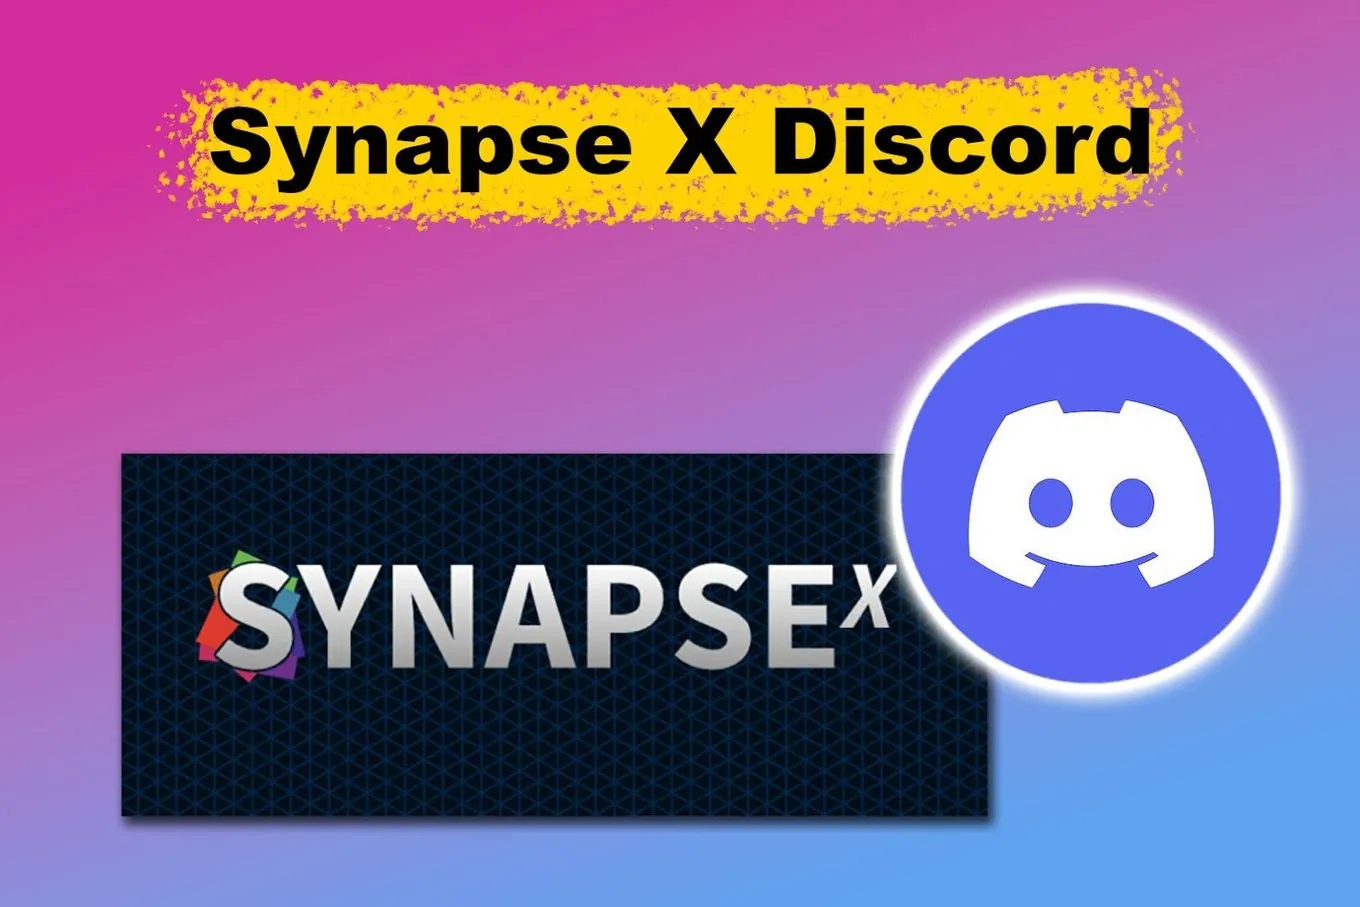 Synapse X Discord